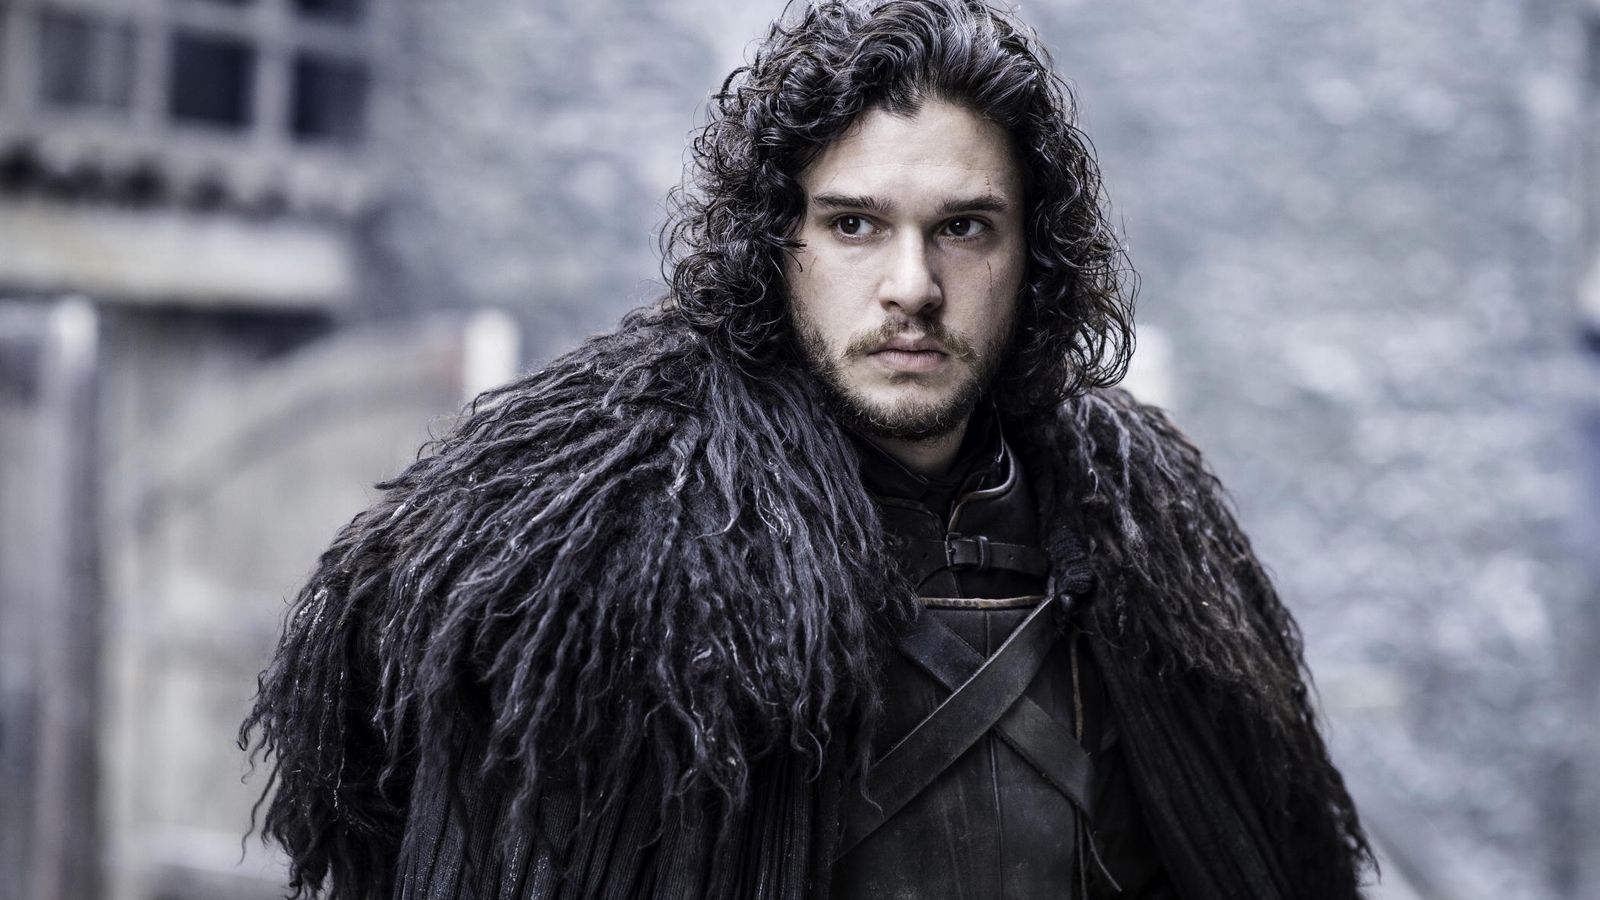 ‘Game of Thrones’: Is Jon Snow Too Feminine for the Masculine World?